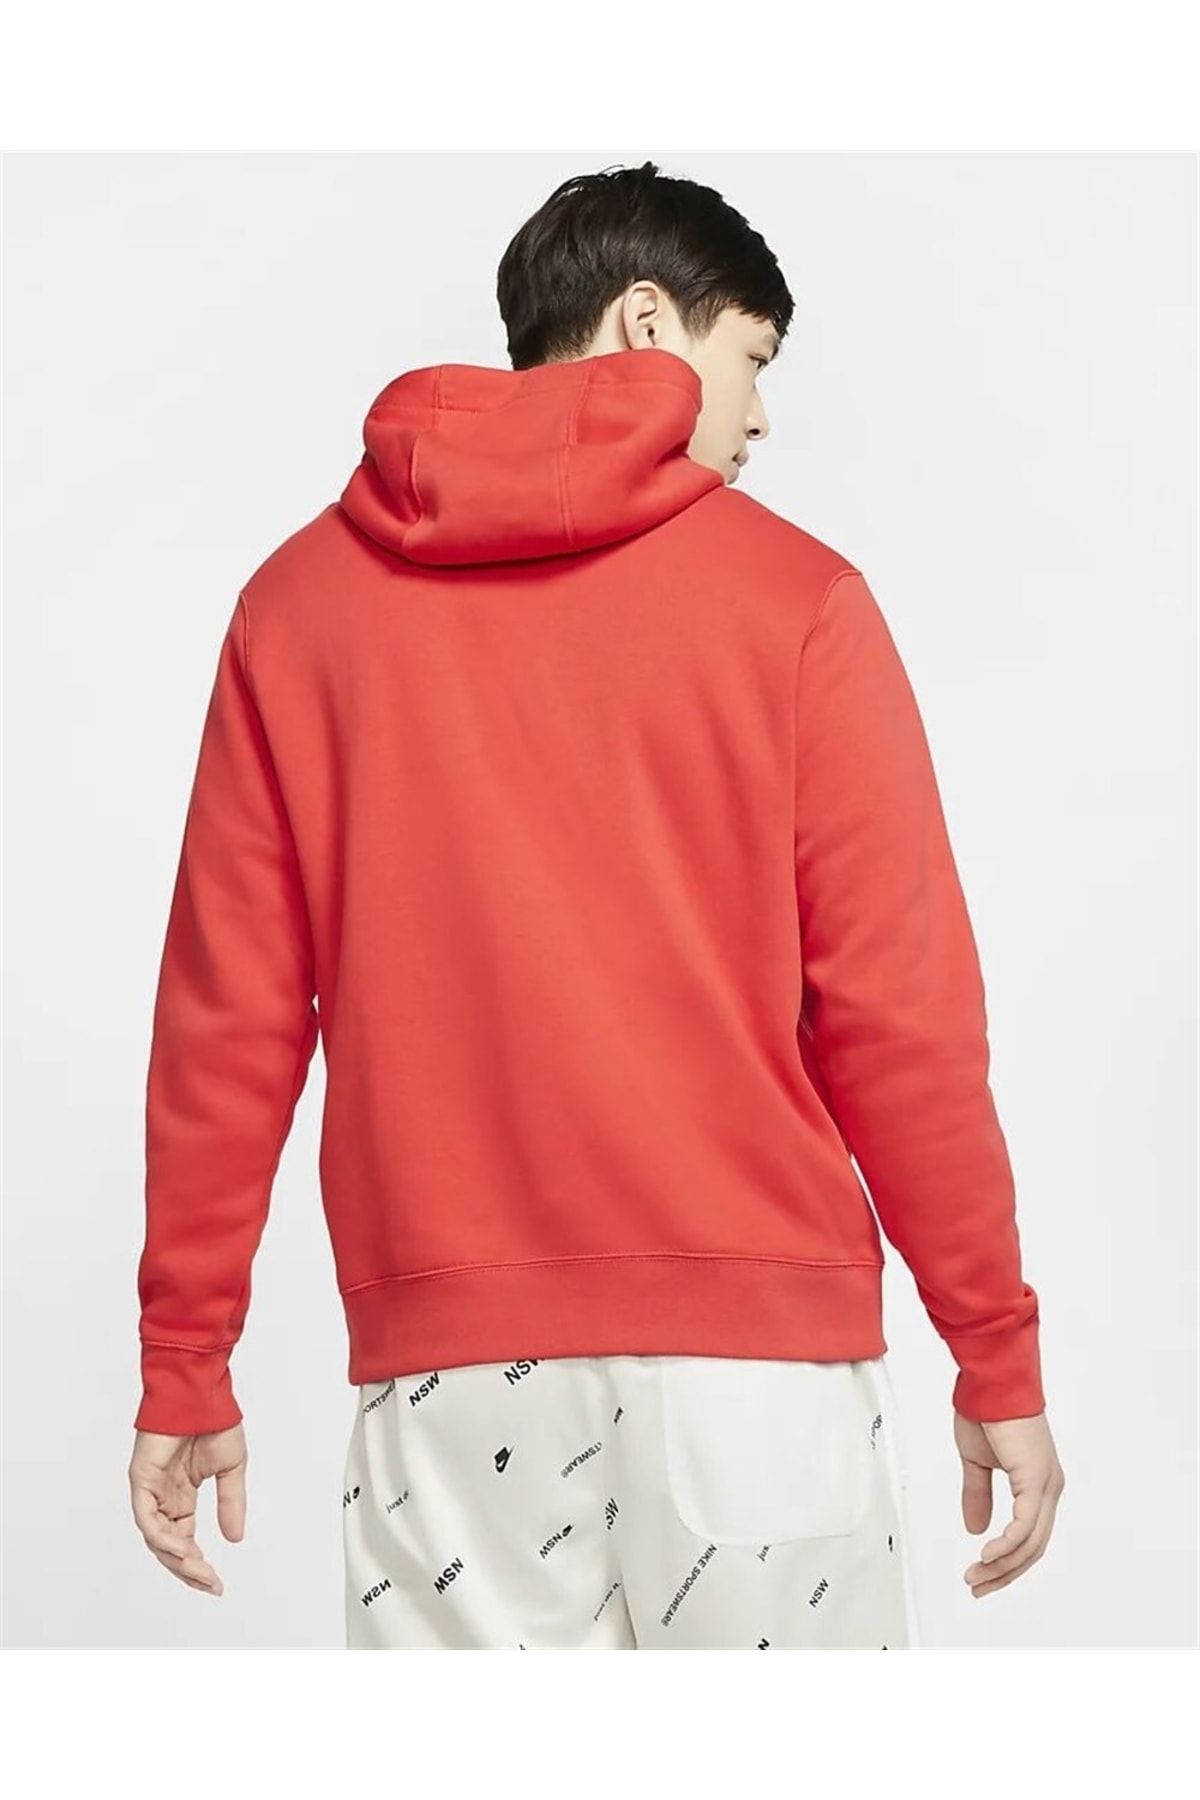 Sports fit Trendyol - - Sweatshirt Nike Red Regular -